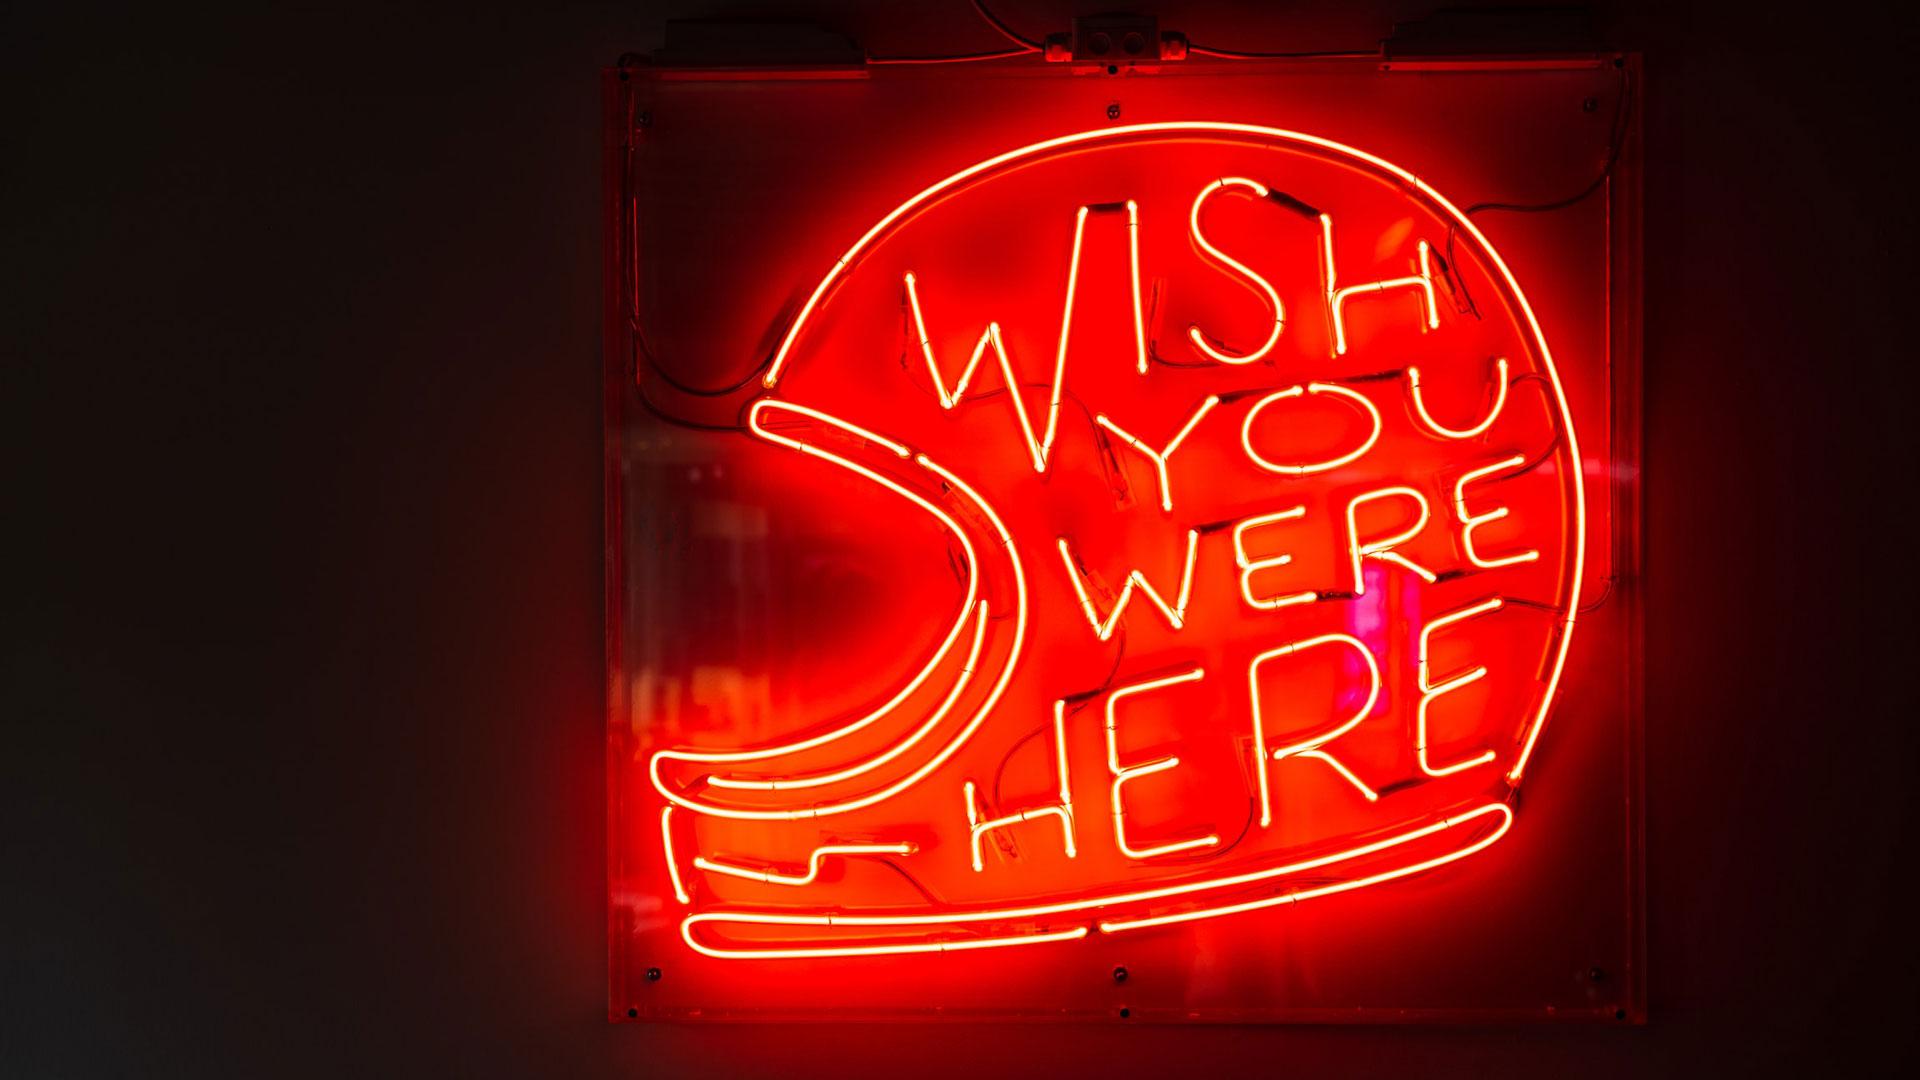 Sinal de neon com as palavras "Wish you were here"